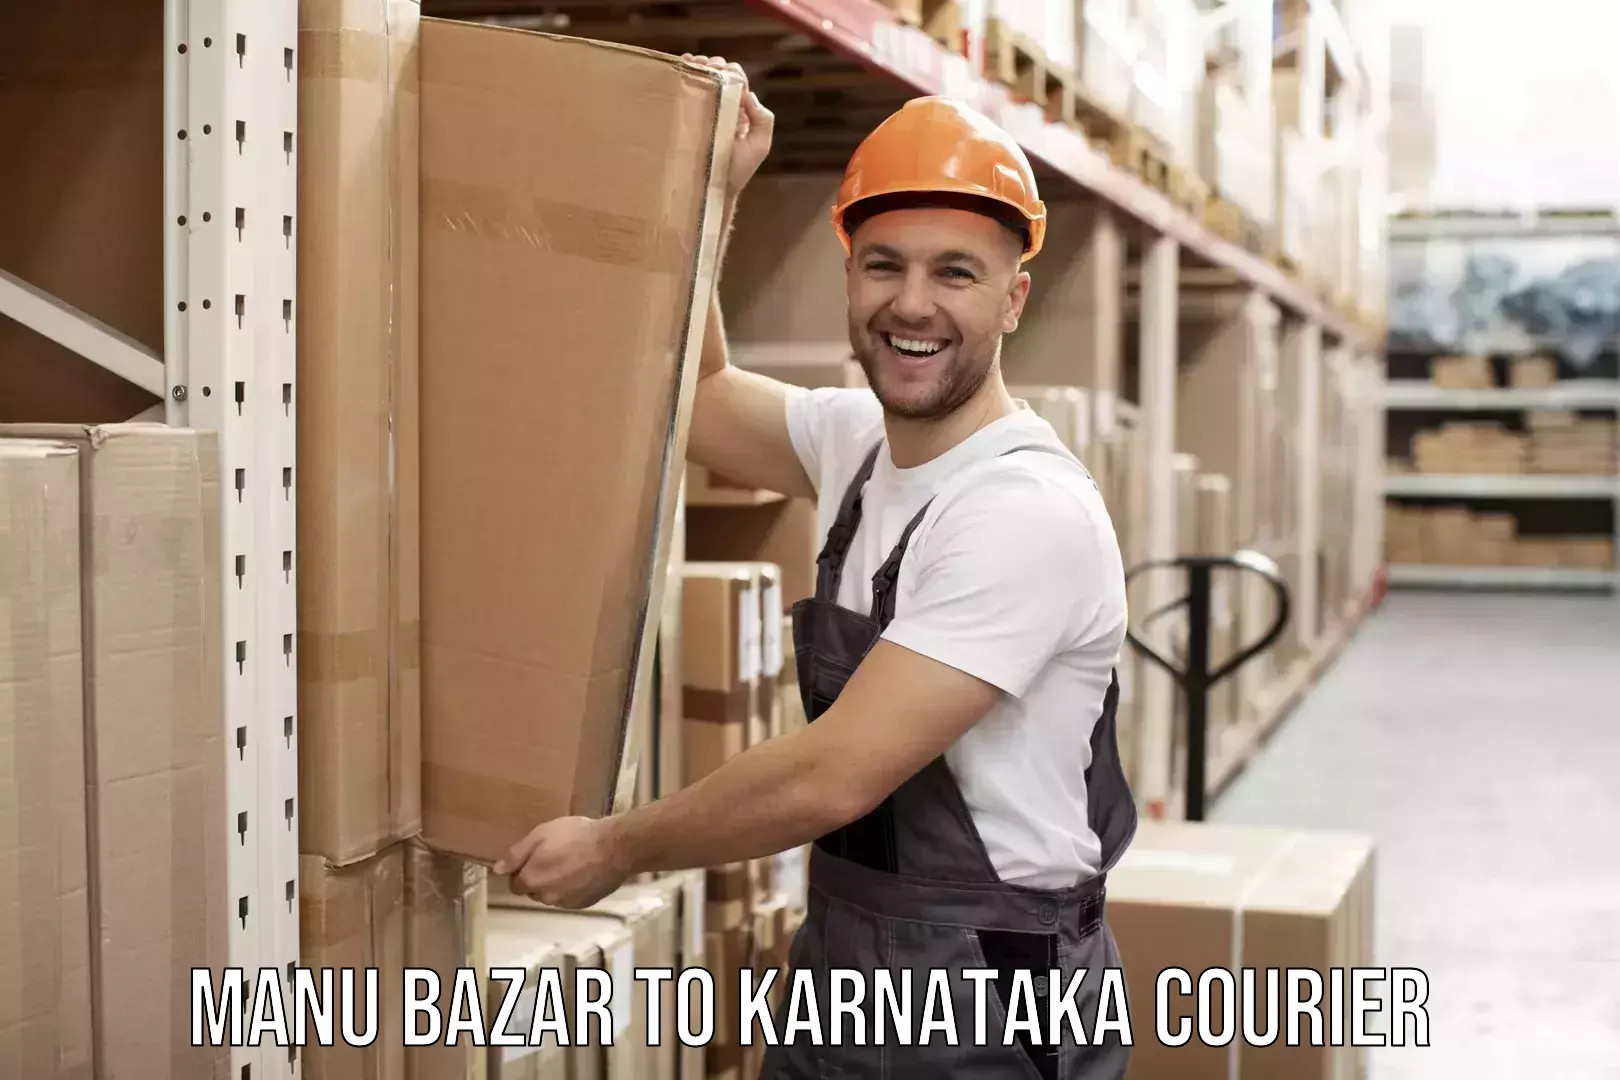 Home moving specialists Manu Bazar to Karnataka